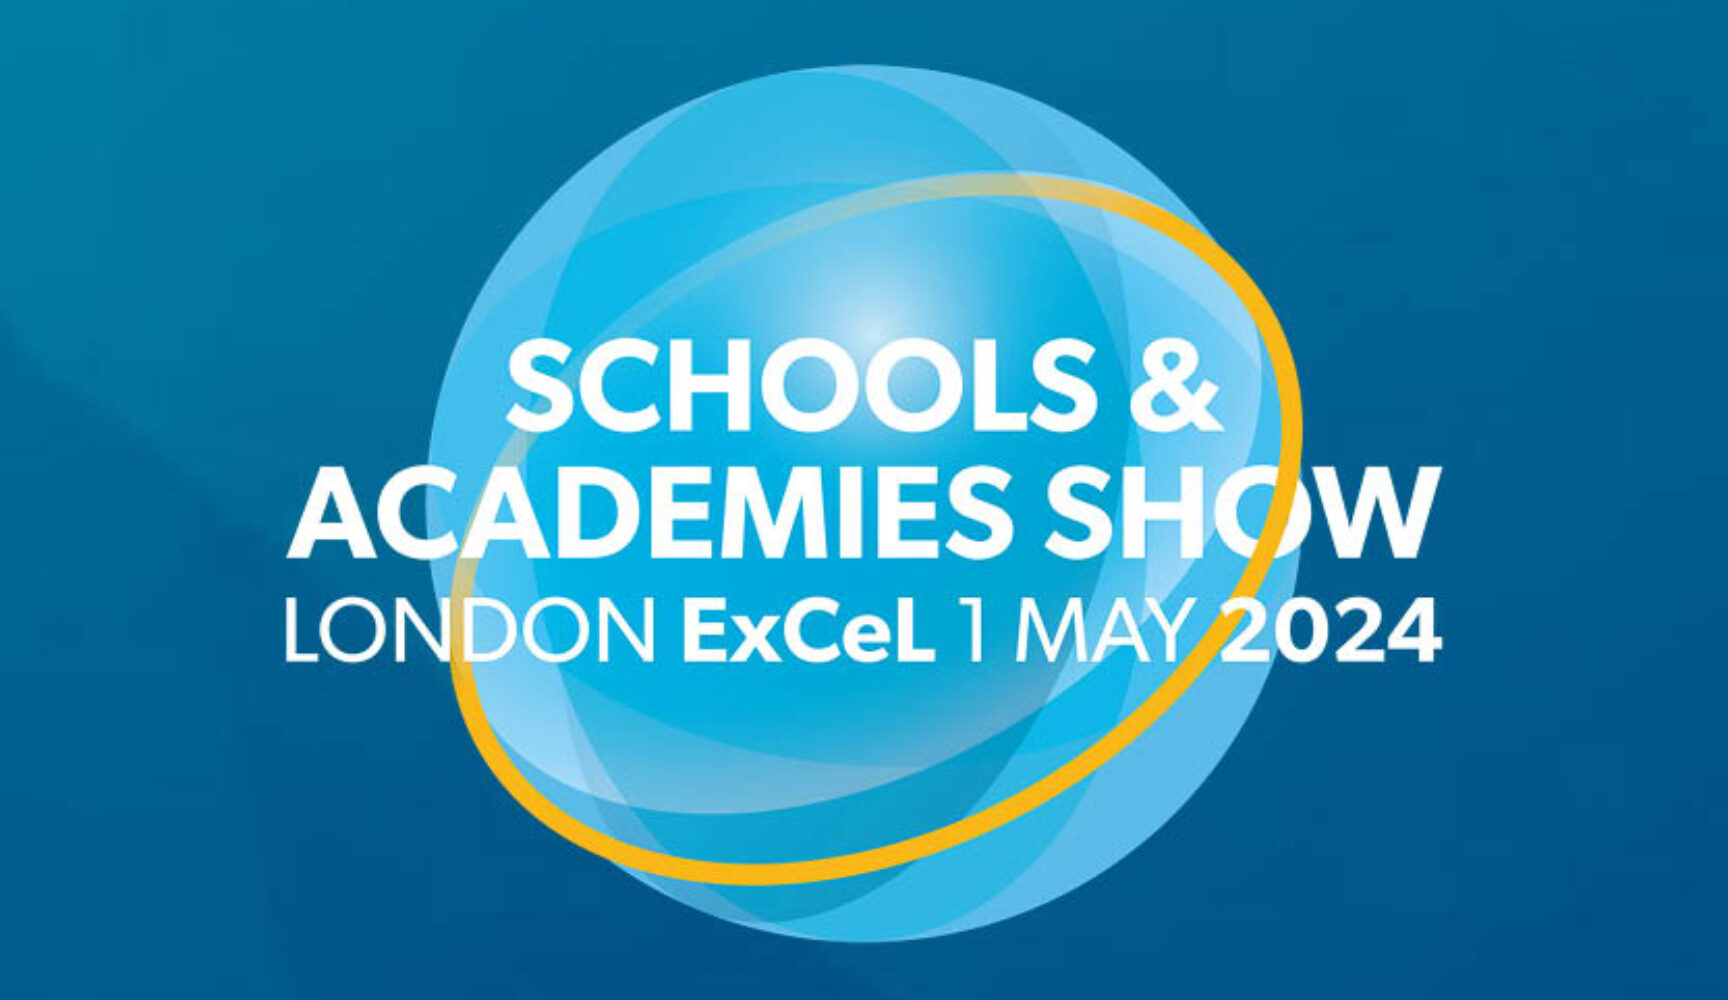 Schools & Academies Show logo on a blue background